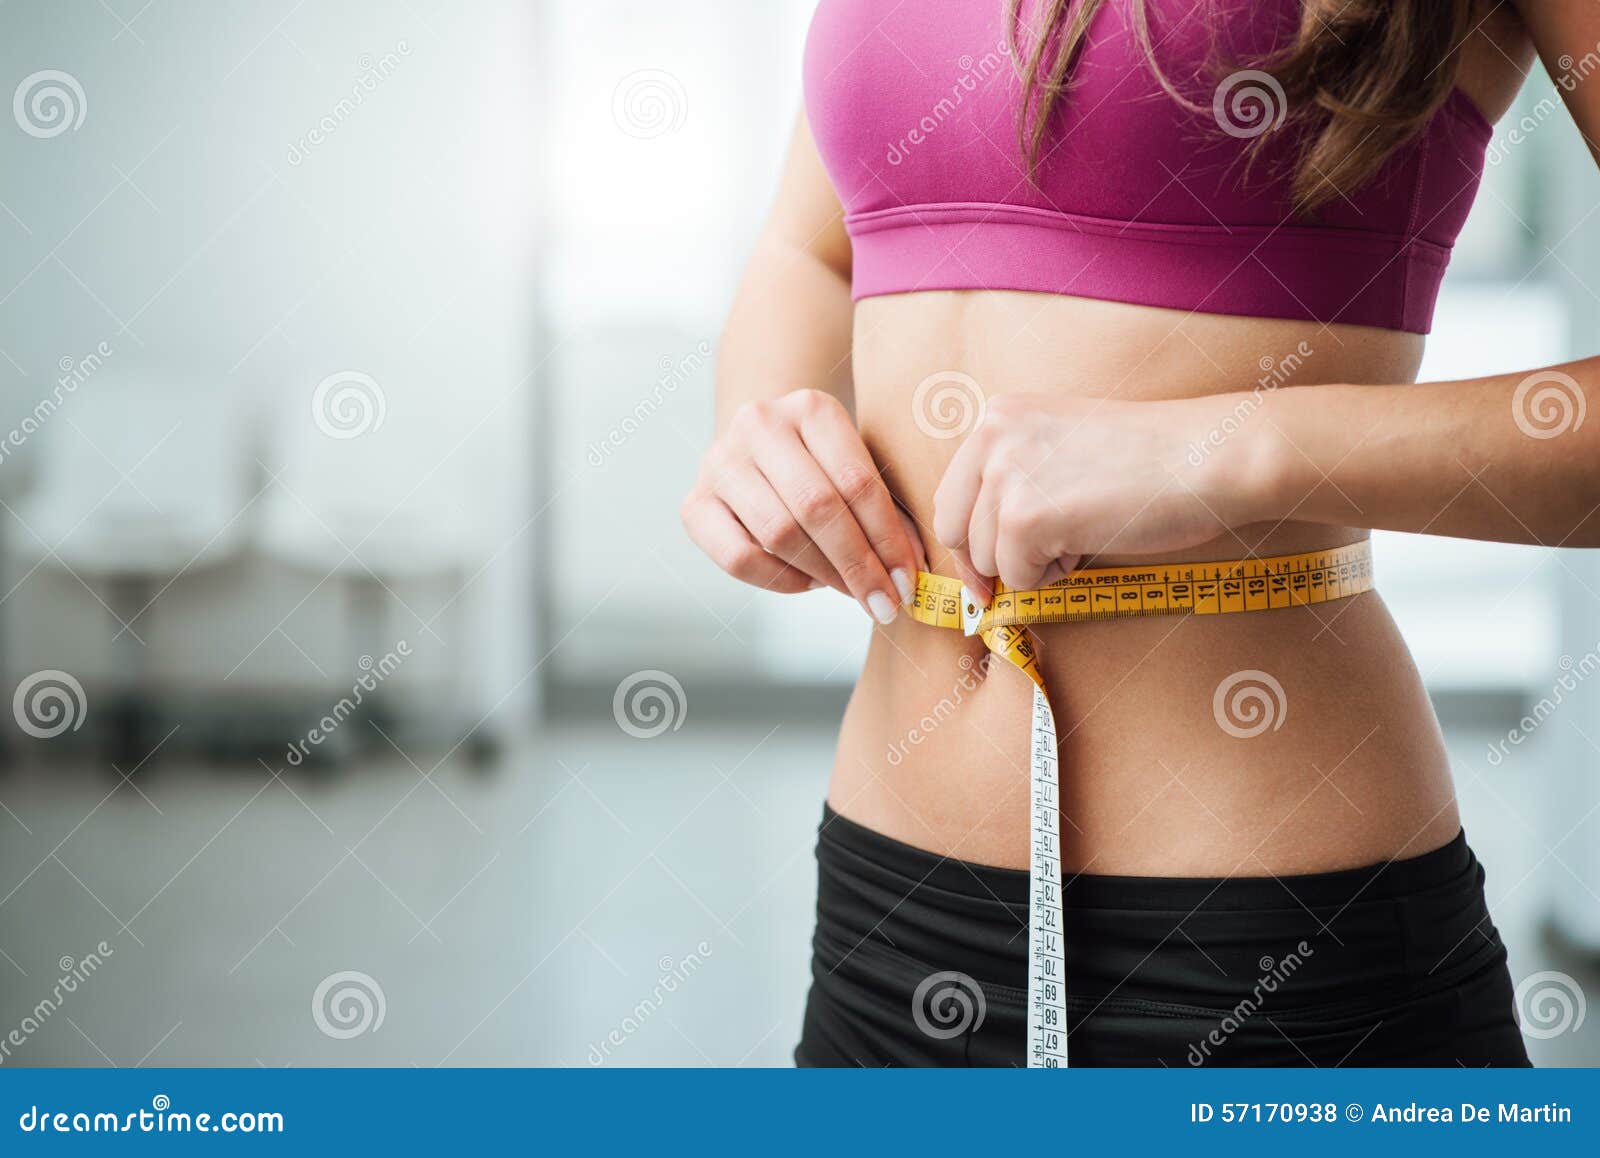 slim woman measuring her thin waist